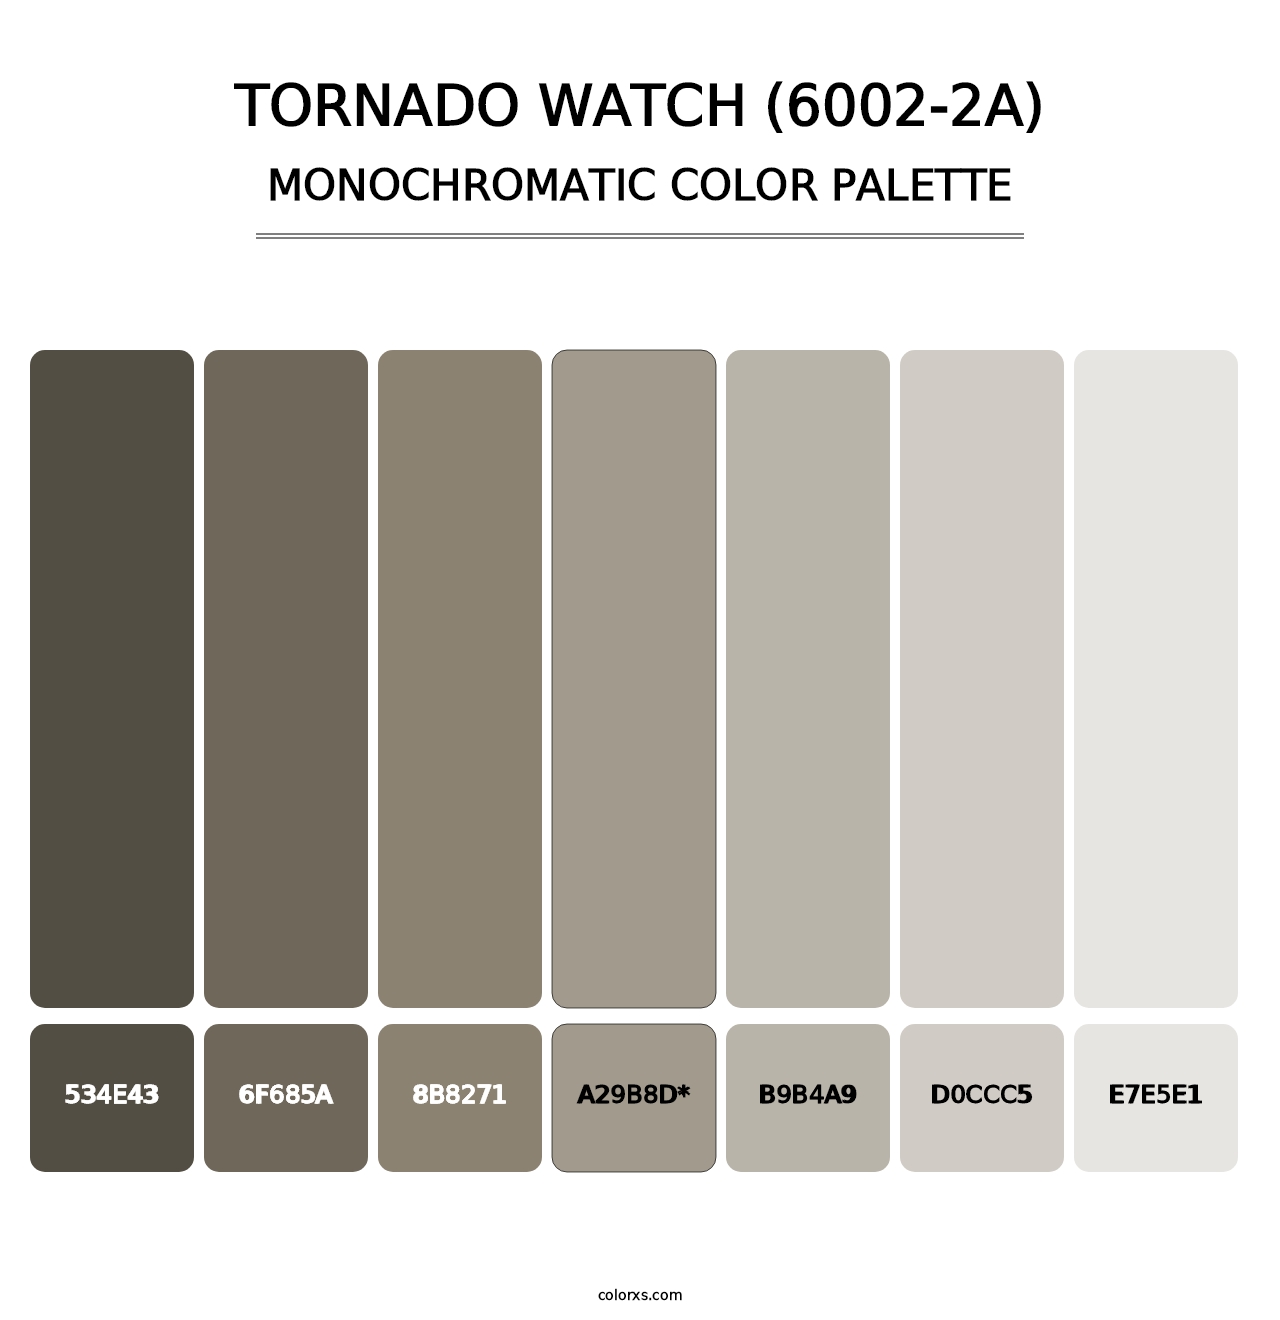 Tornado Watch (6002-2A) - Monochromatic Color Palette